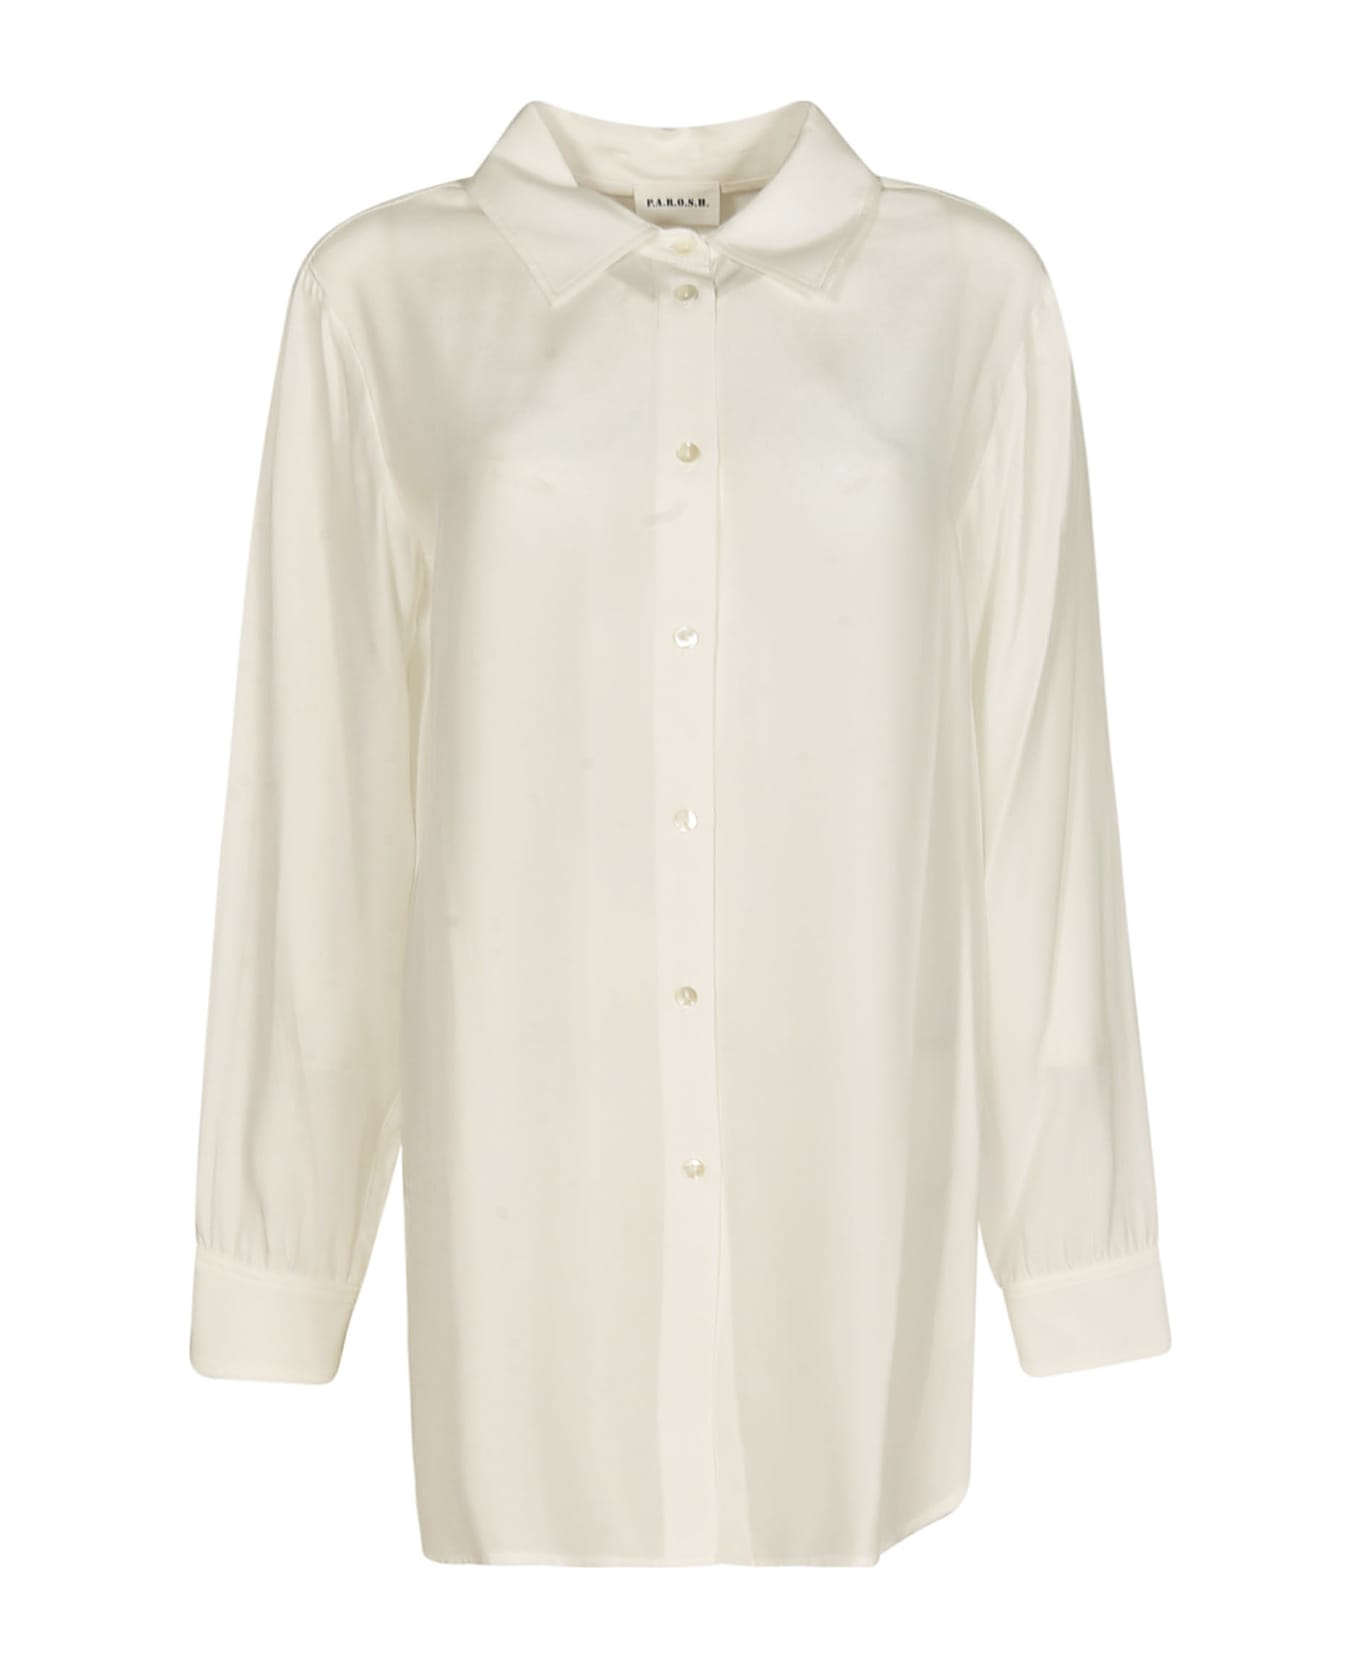 Parosh Long-sleeved Shirt - Cream シャツ